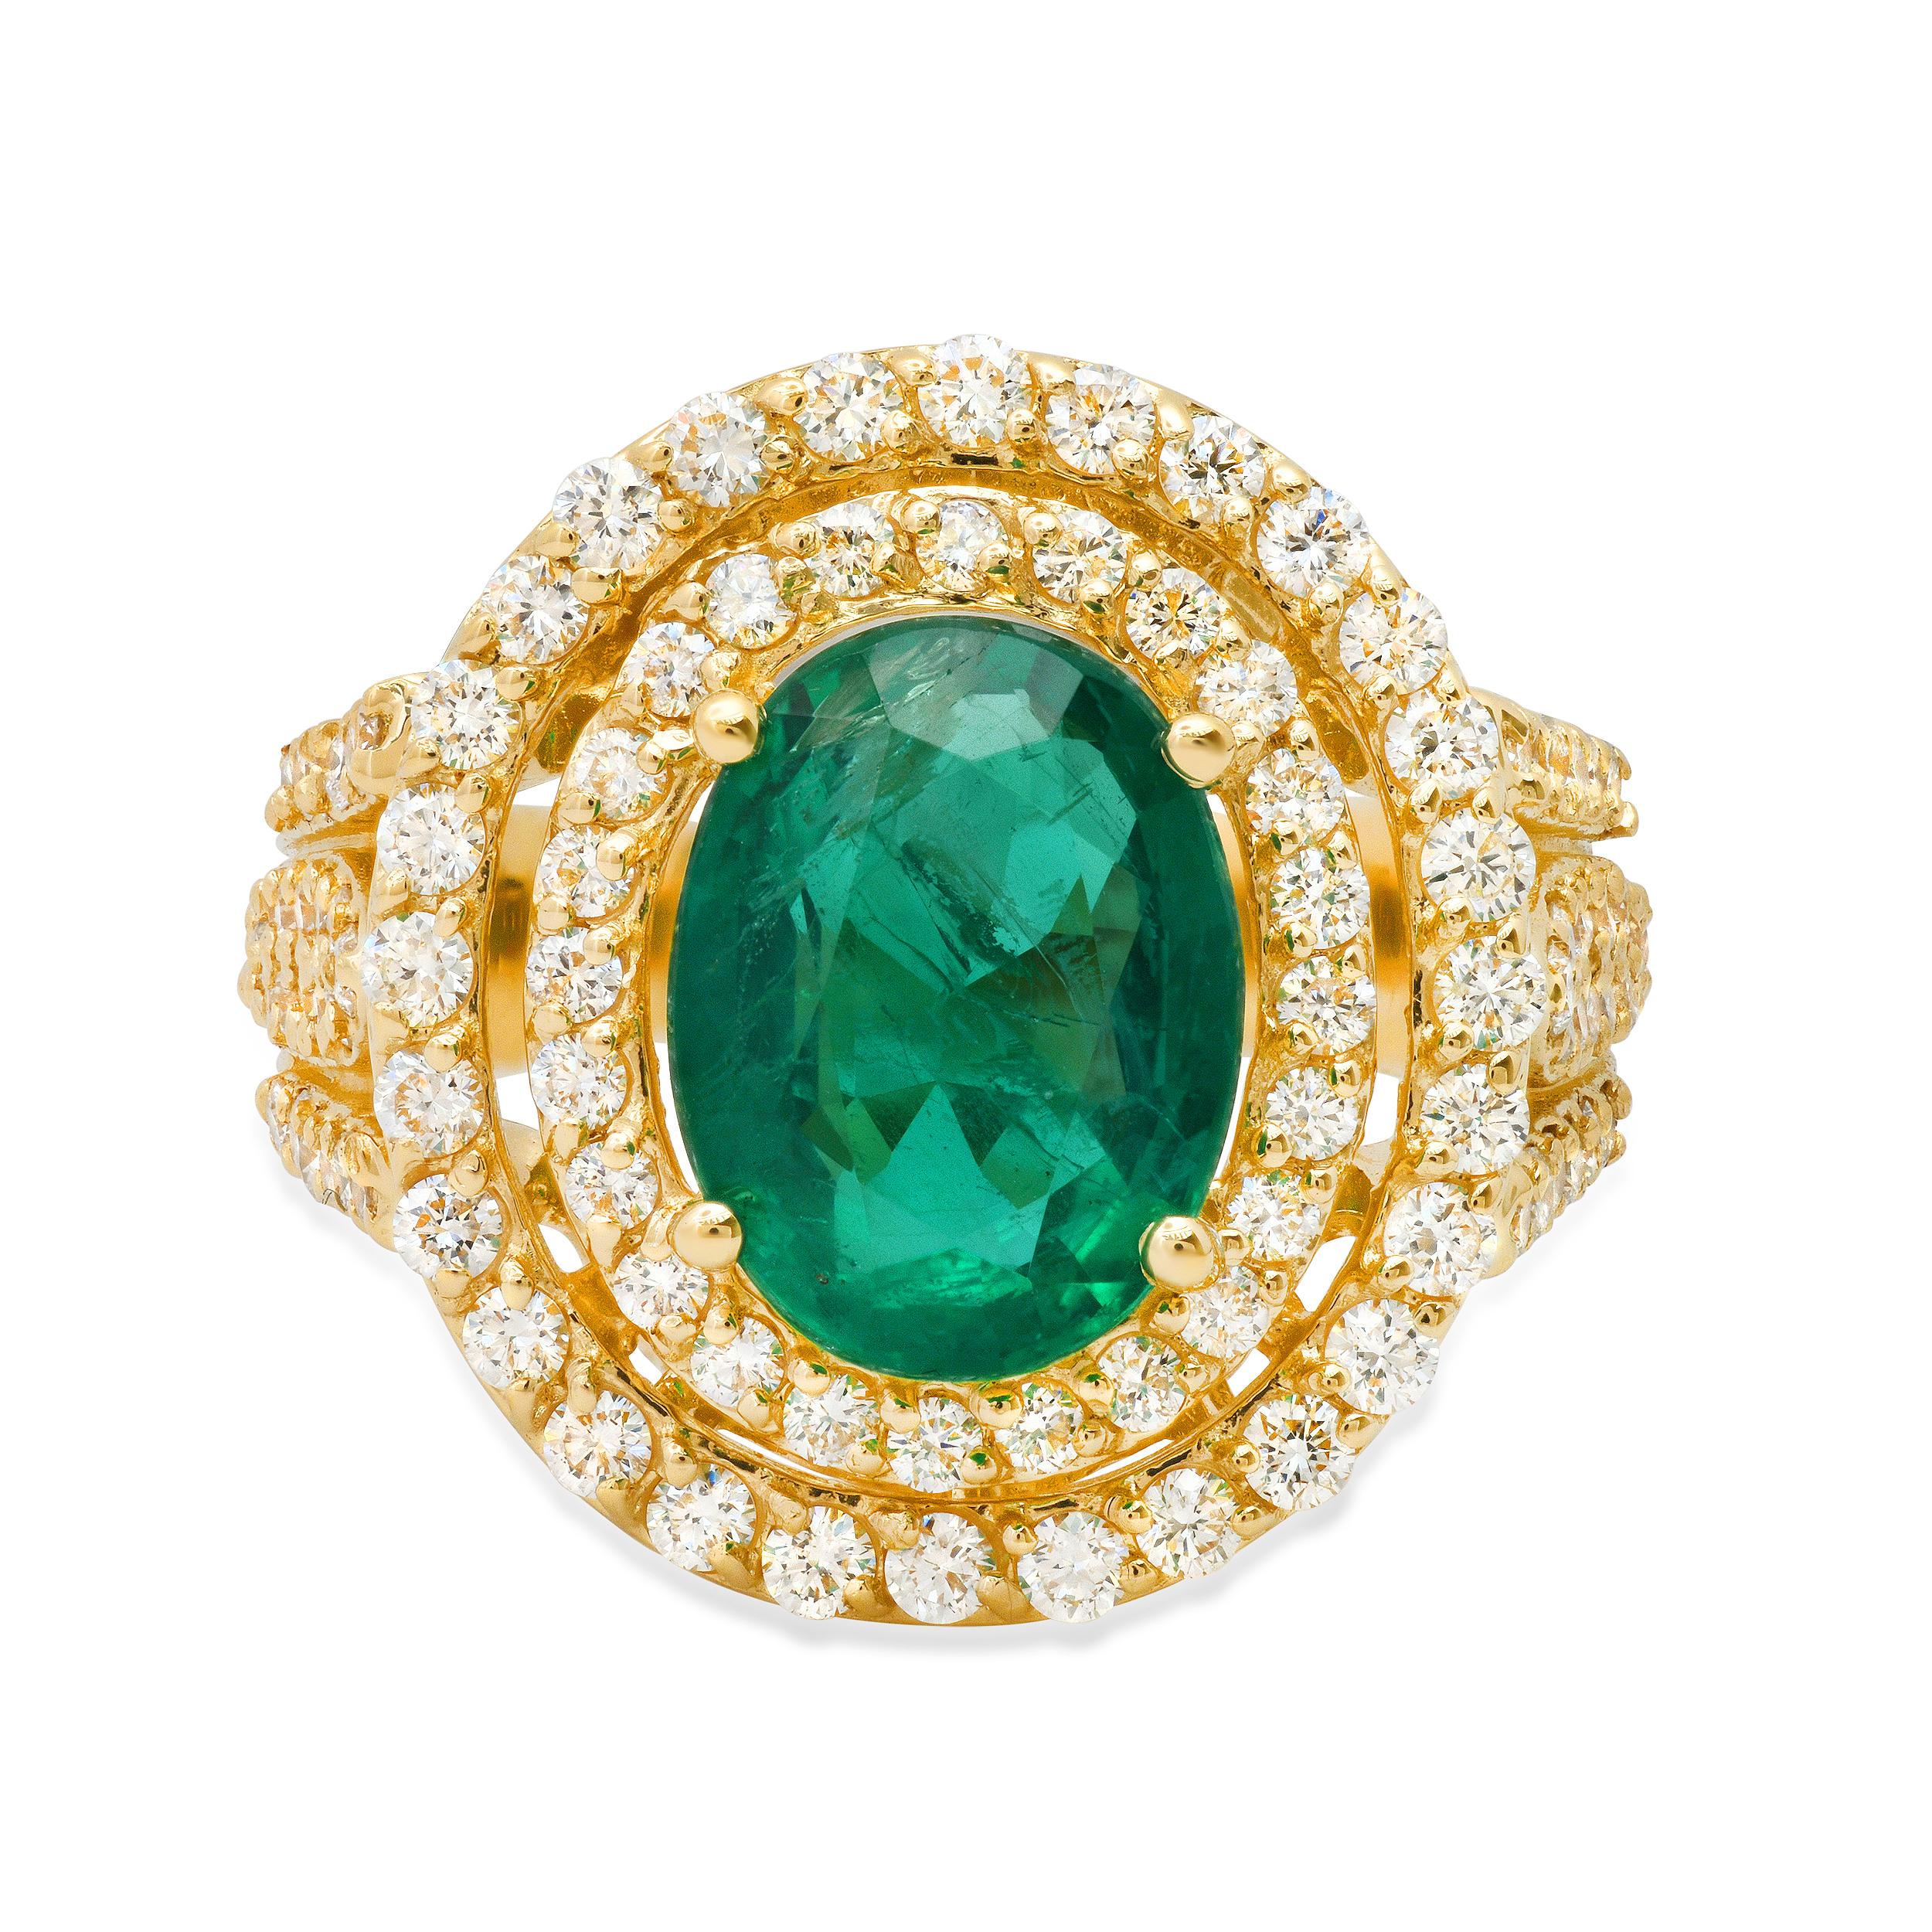 14K Yellow Gold 3.97ct Emerald and 1.83ct Diamond Ring